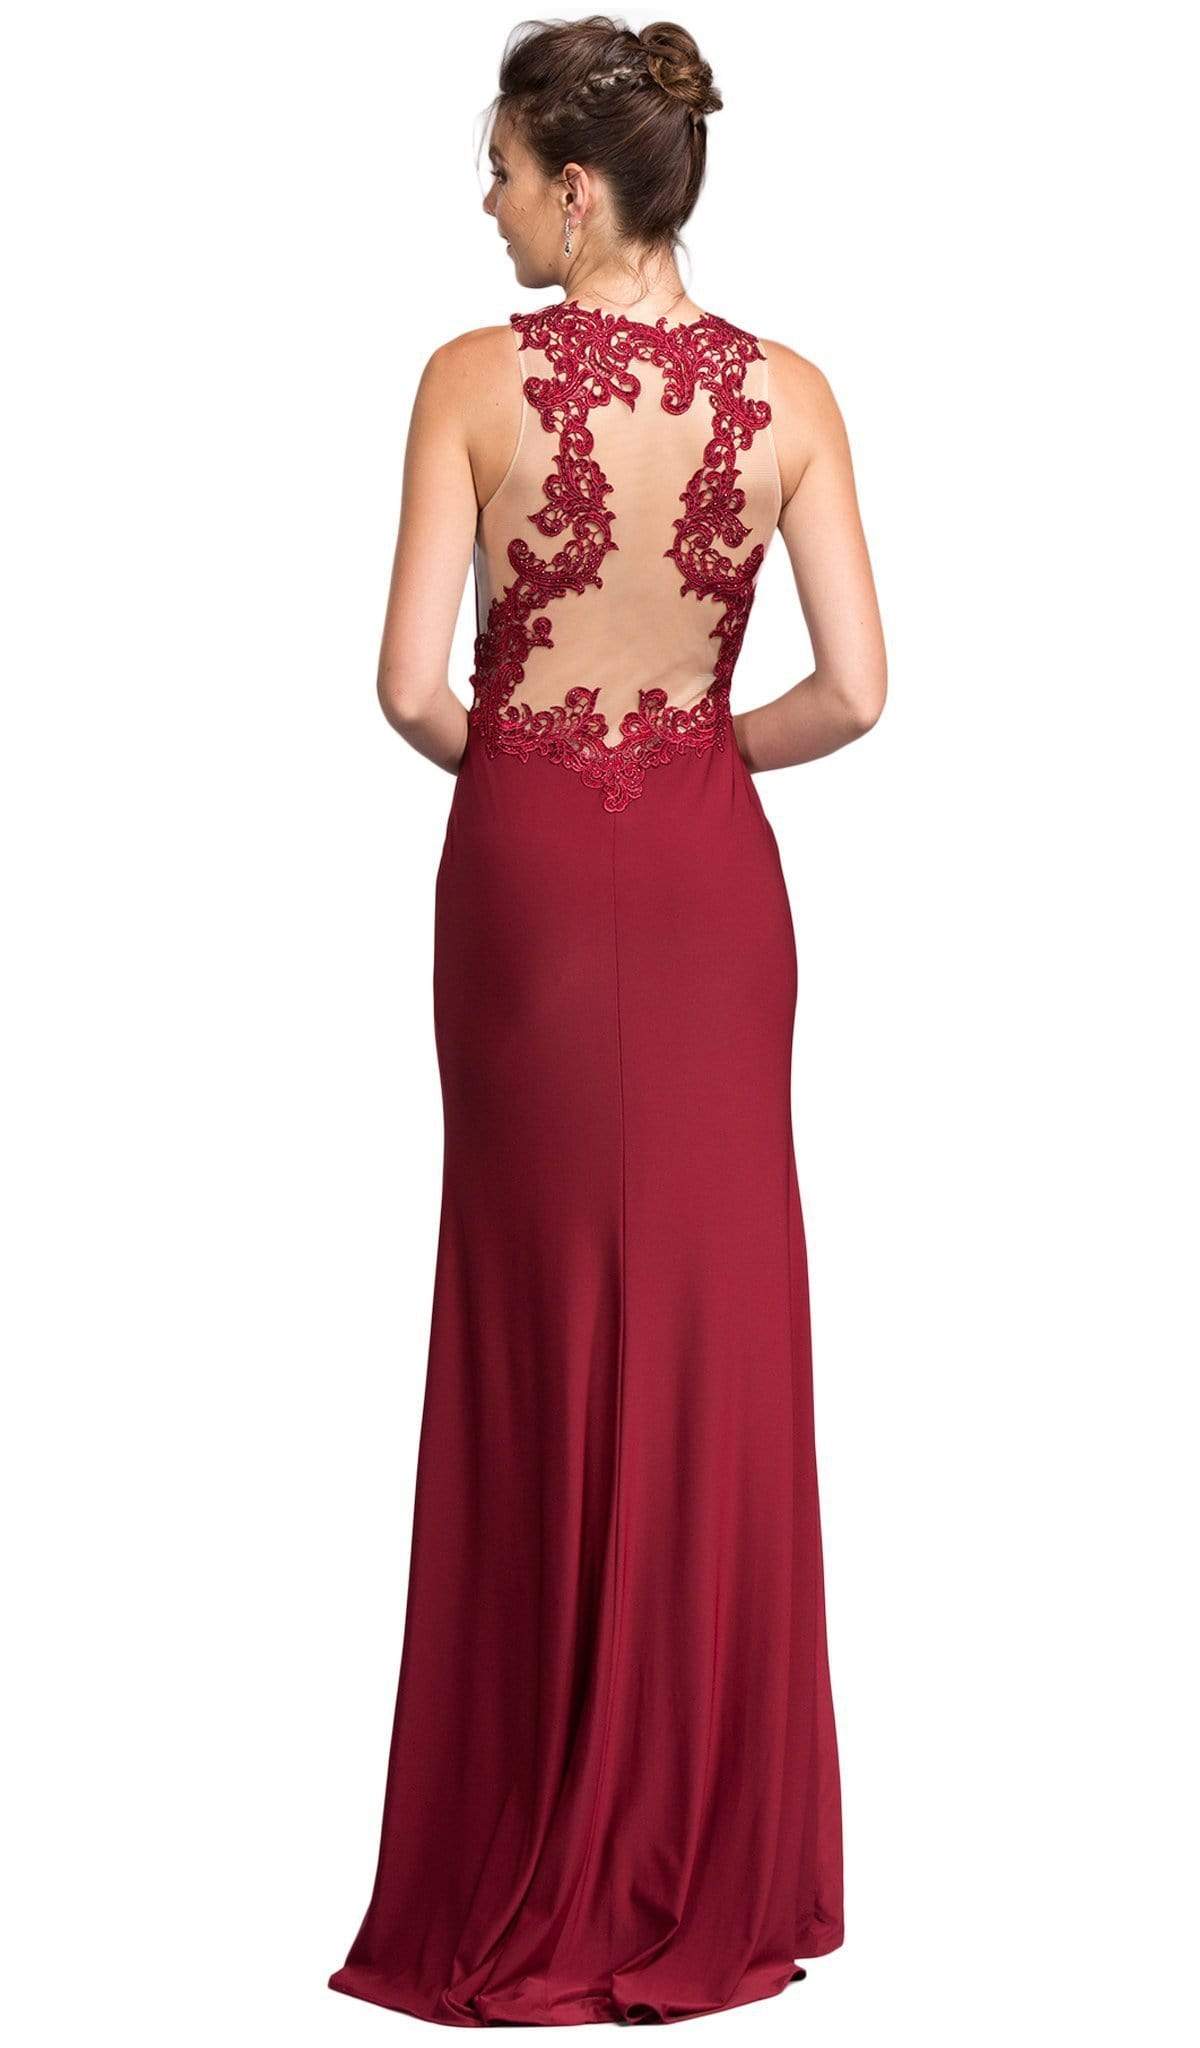 Bedazzled Jewel Neck Sheath Prom Dress Dress